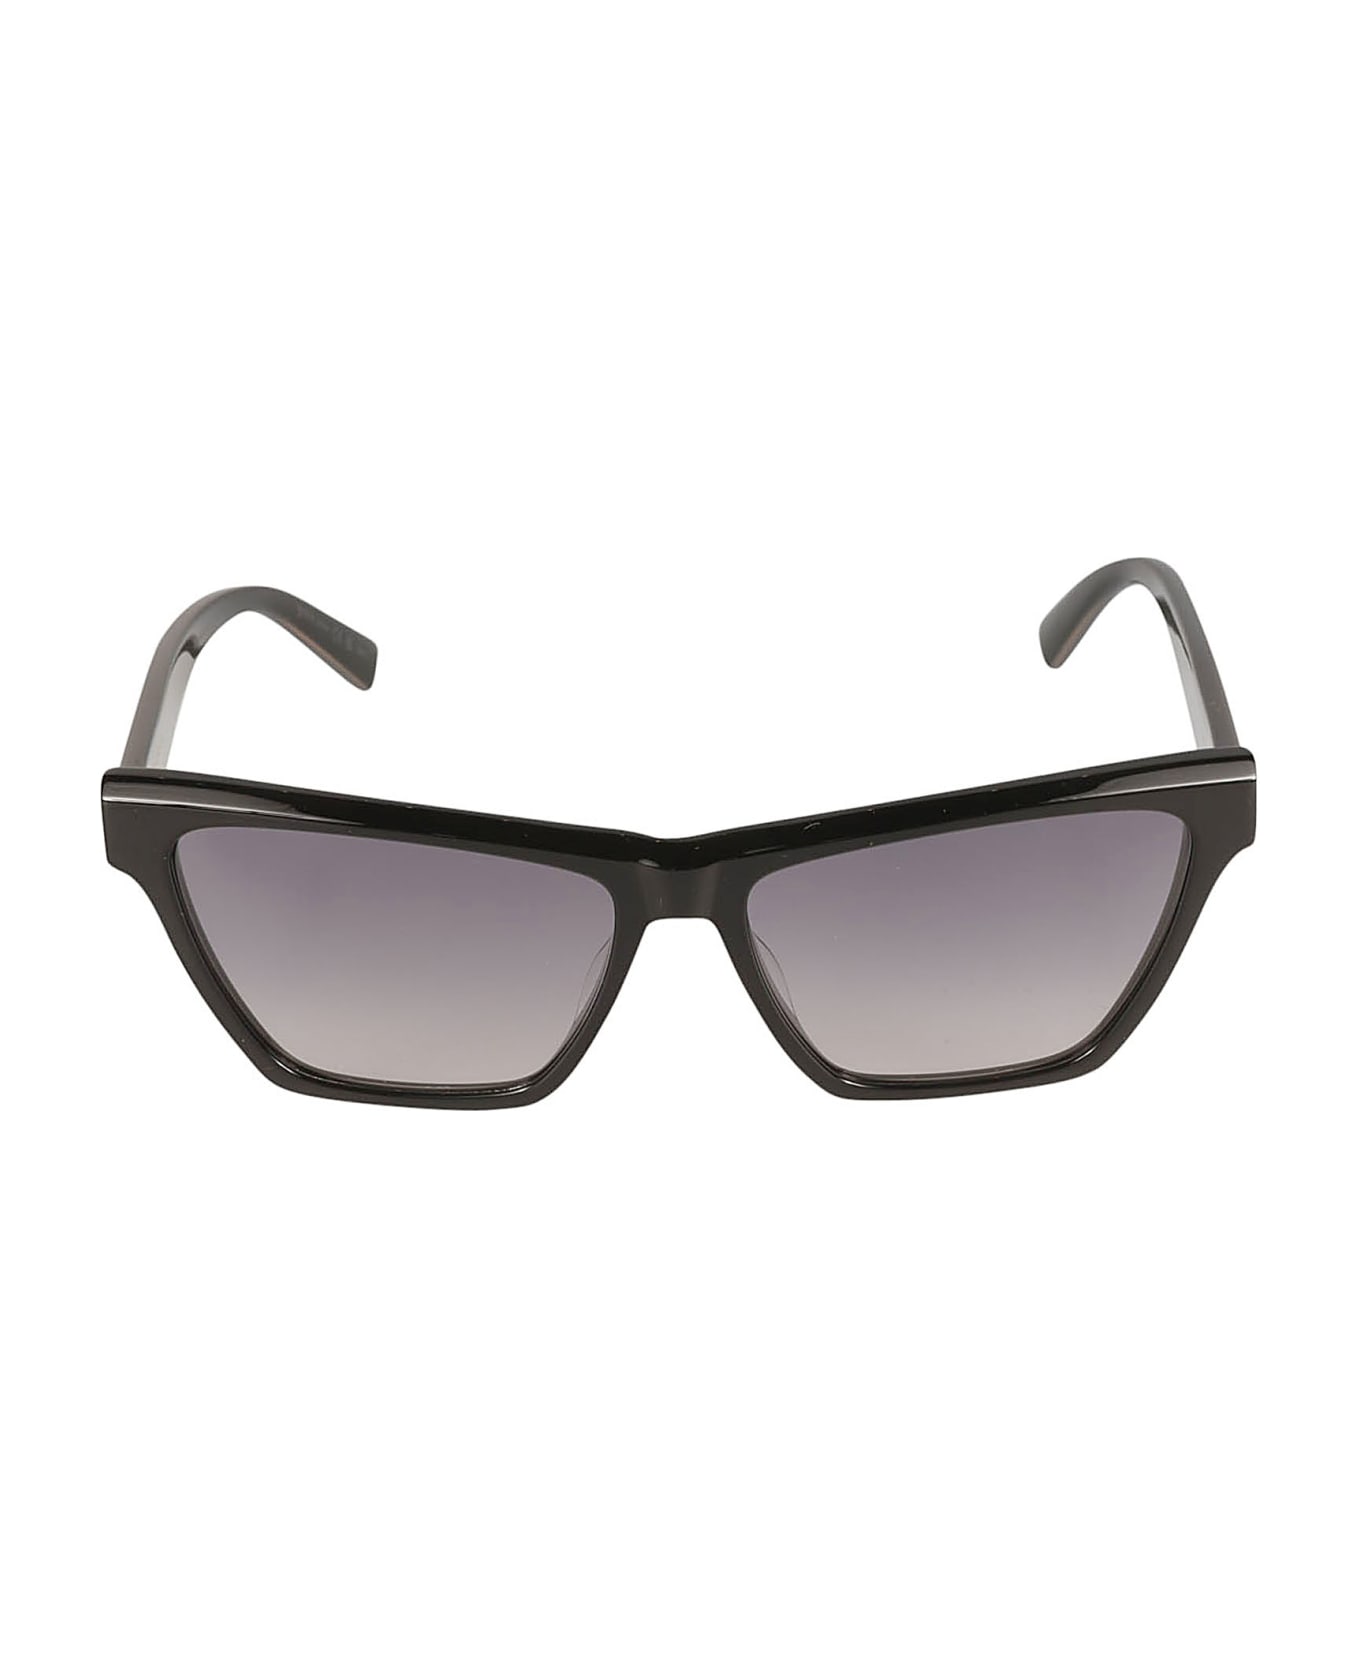 Saint Laurent Eyewear Ysl Plaque Square Frame Sunglasses - Black/Grey